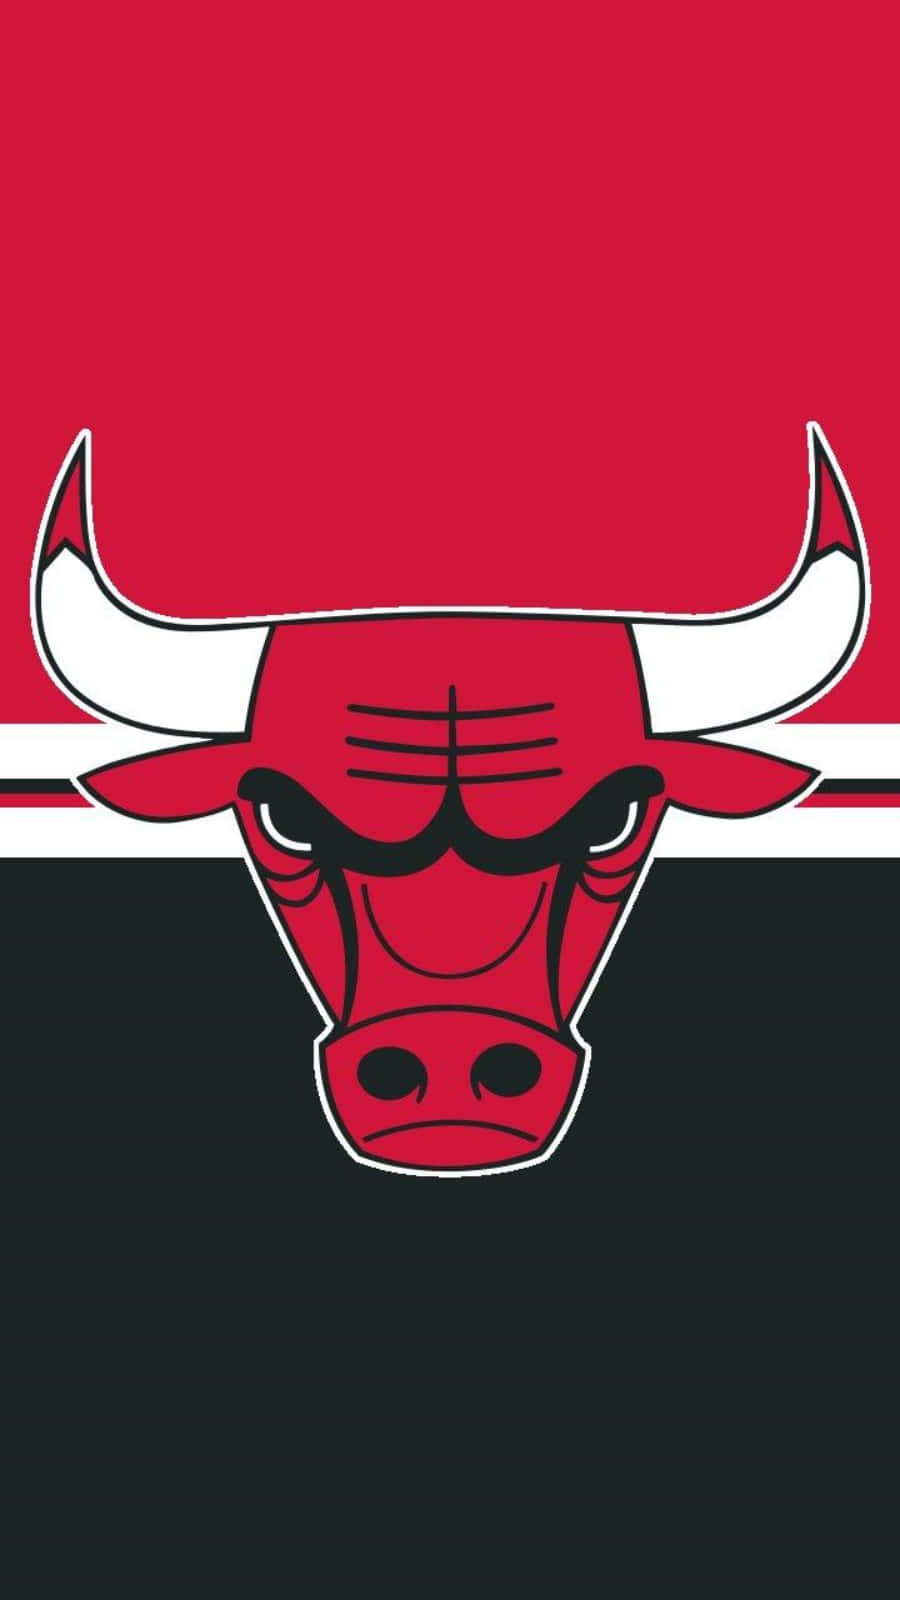 Nuevofondo De Pantalla Para Iphone Con Temática De Los Chicago Bulls. Fondo de pantalla